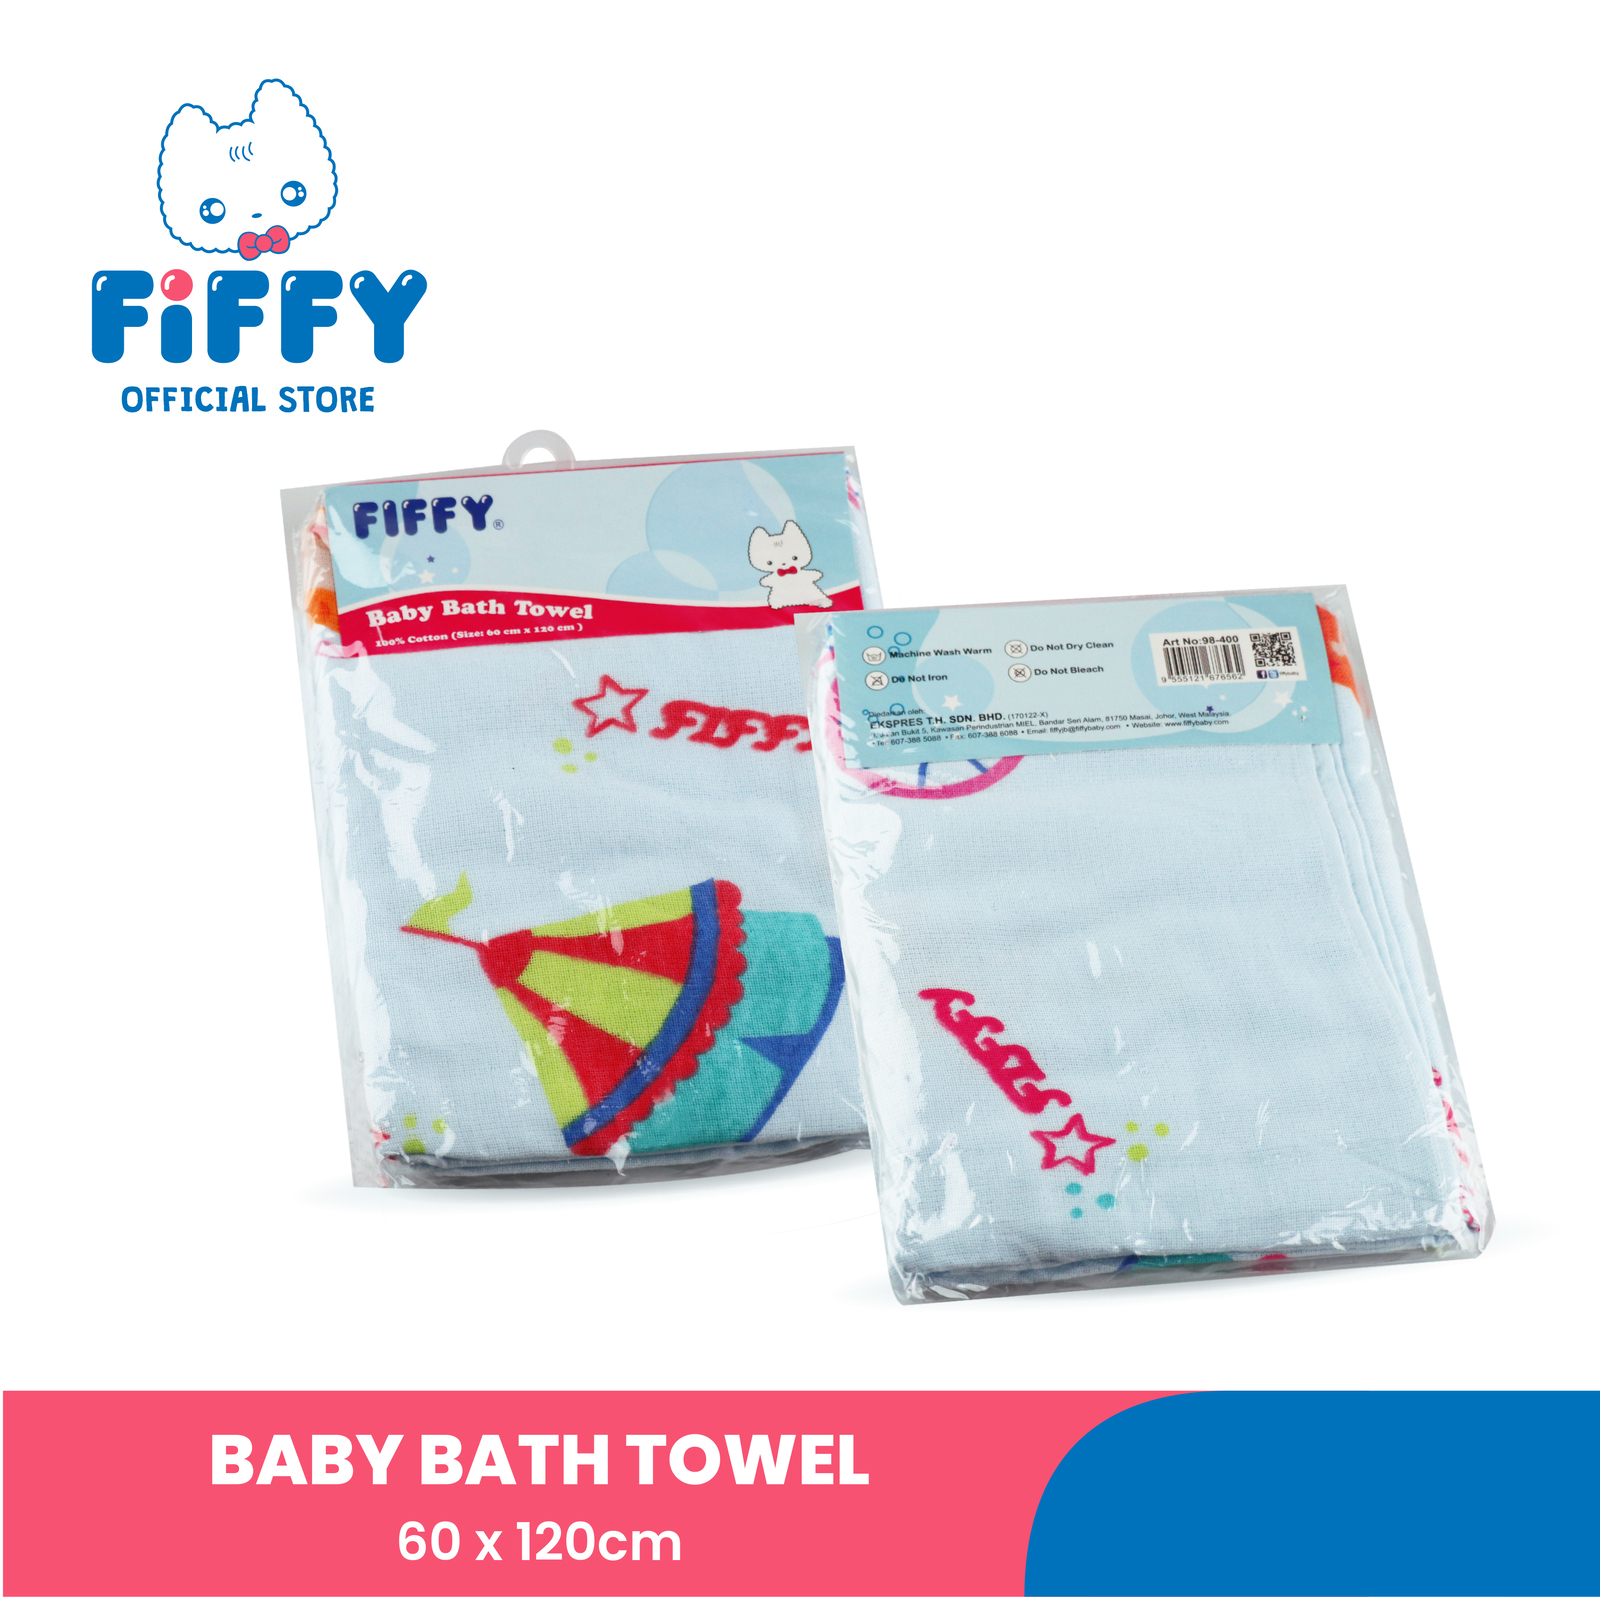 FIFFY BABY BATH TOWEL 60 X 120CM